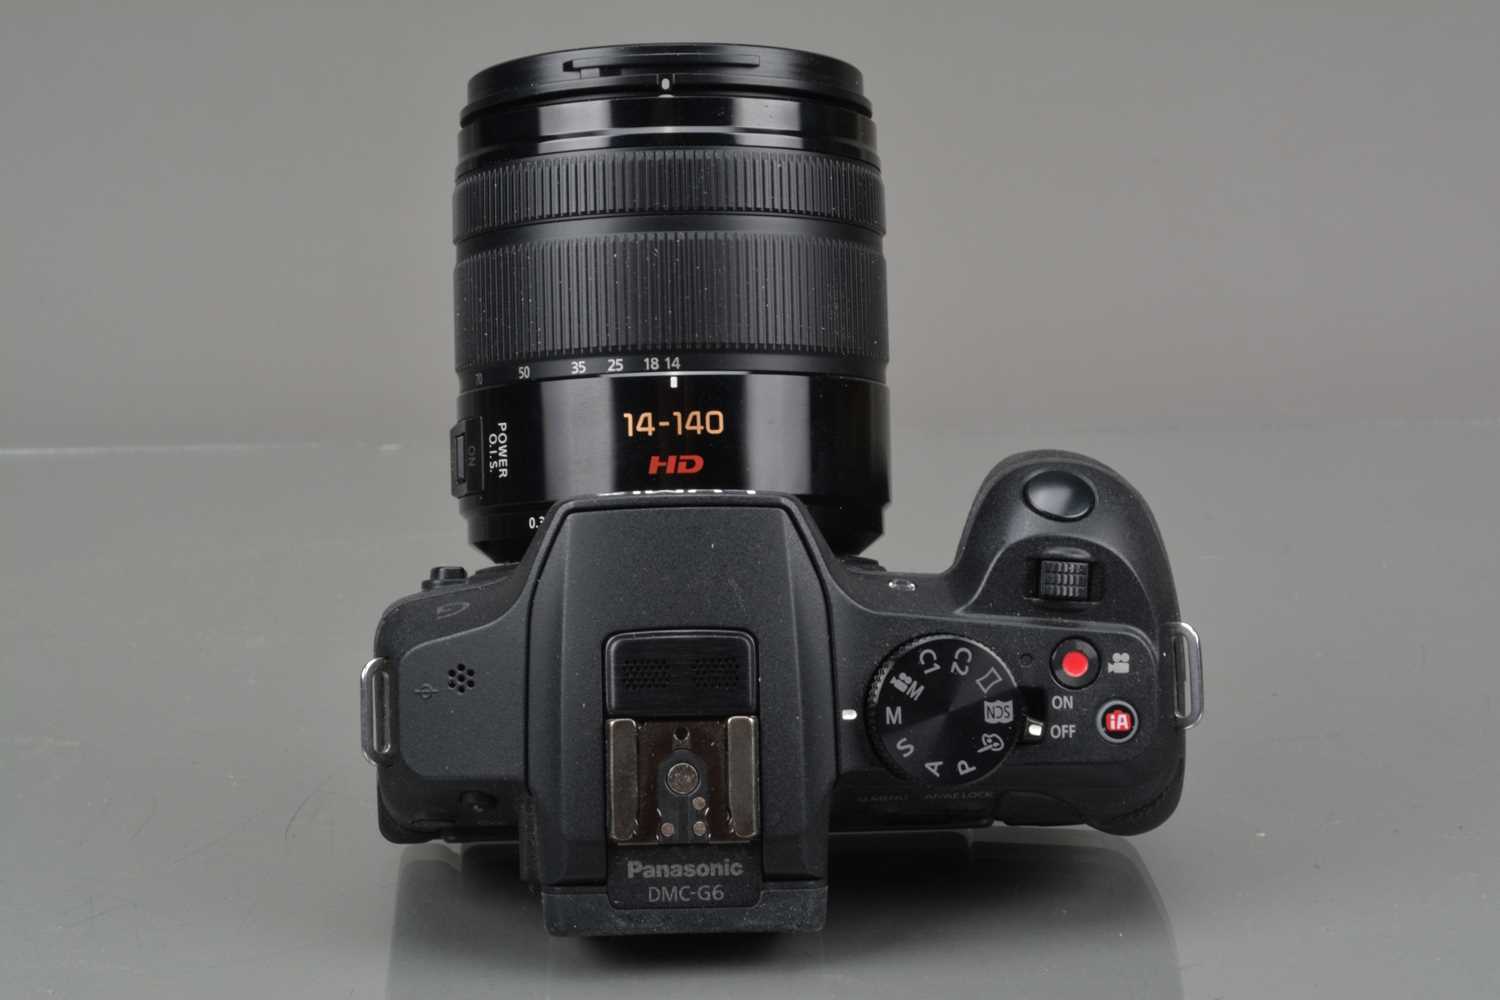 A Panasonic Lumix G6 Digital Camera, - Image 3 of 3